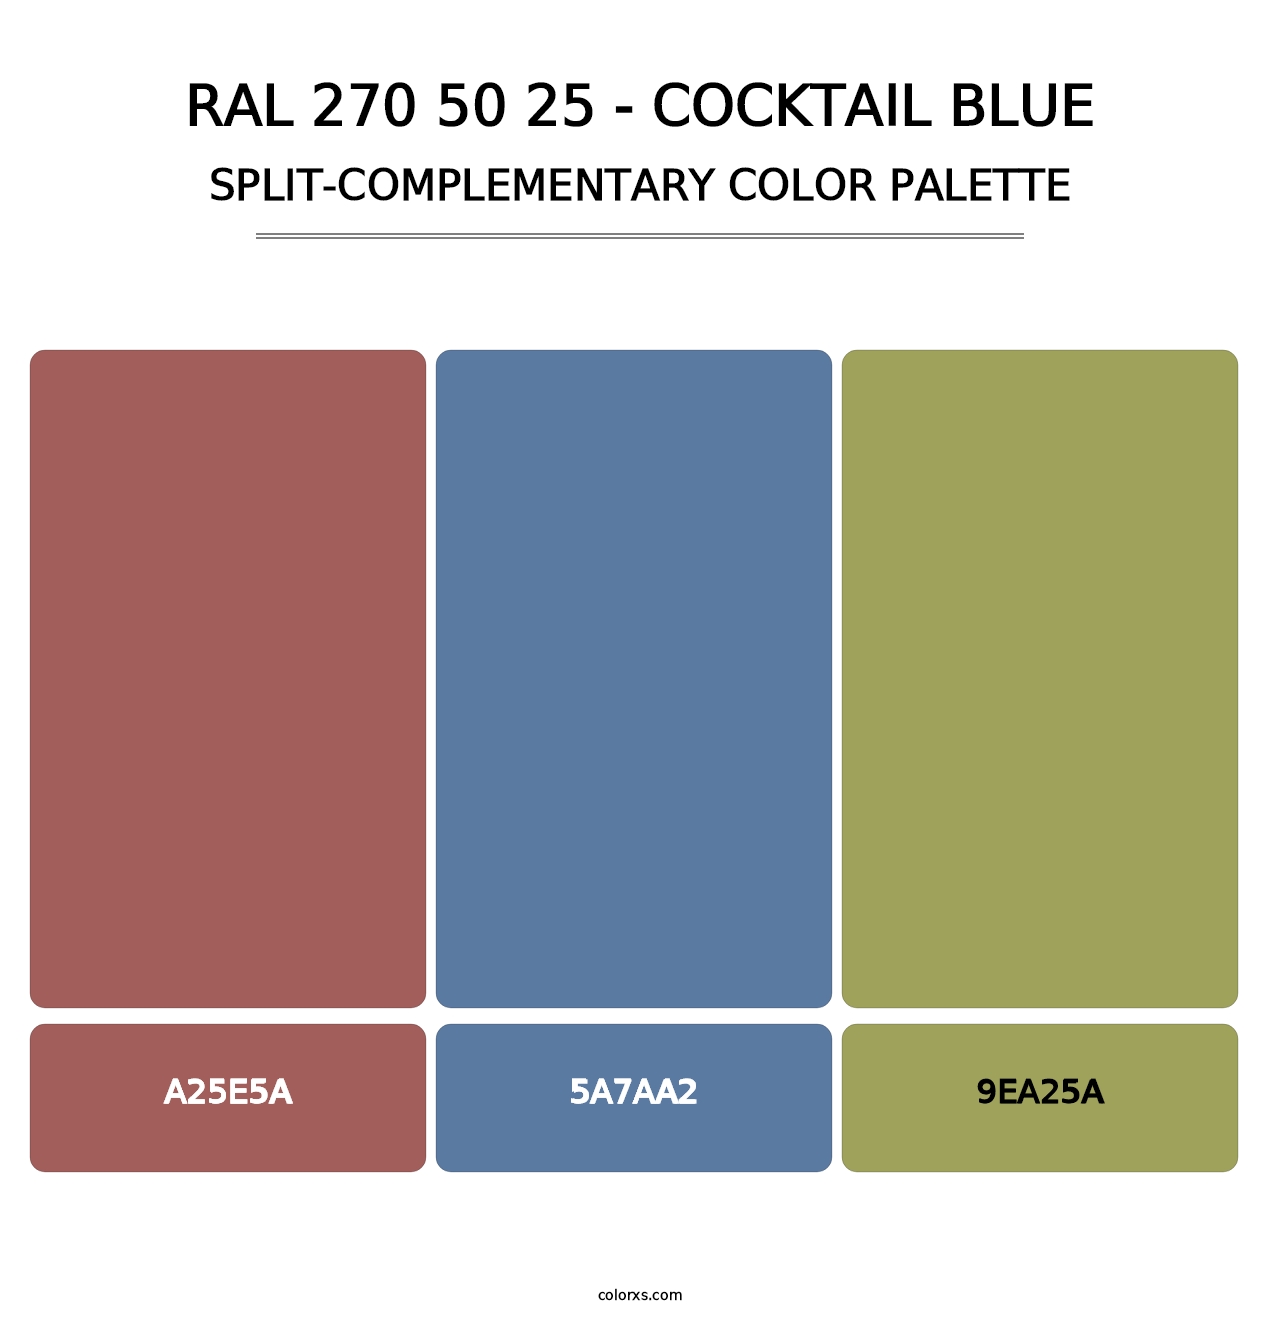 RAL 270 50 25 - Cocktail Blue - Split-Complementary Color Palette